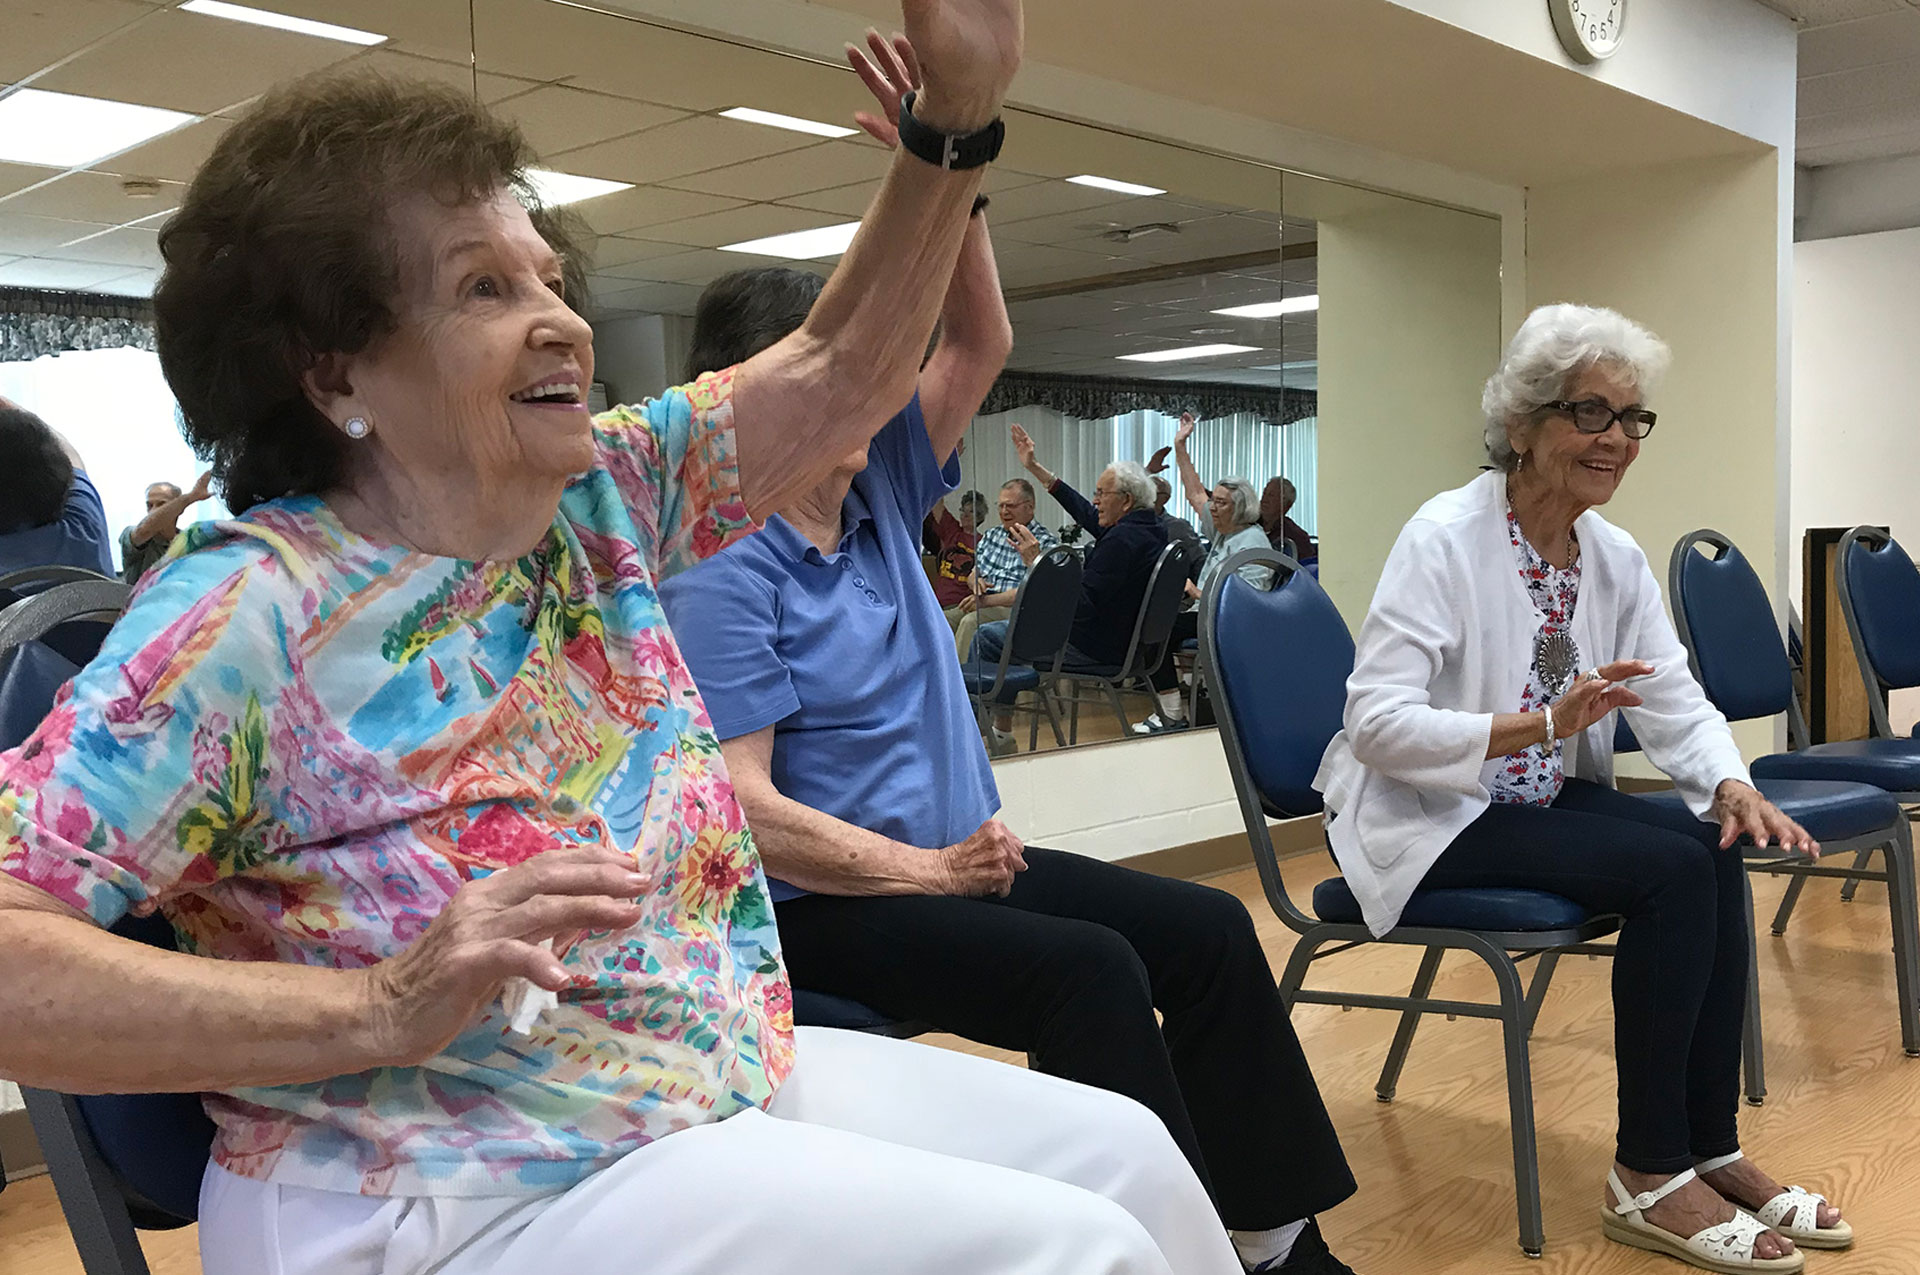 Balance Practice at Senior Center